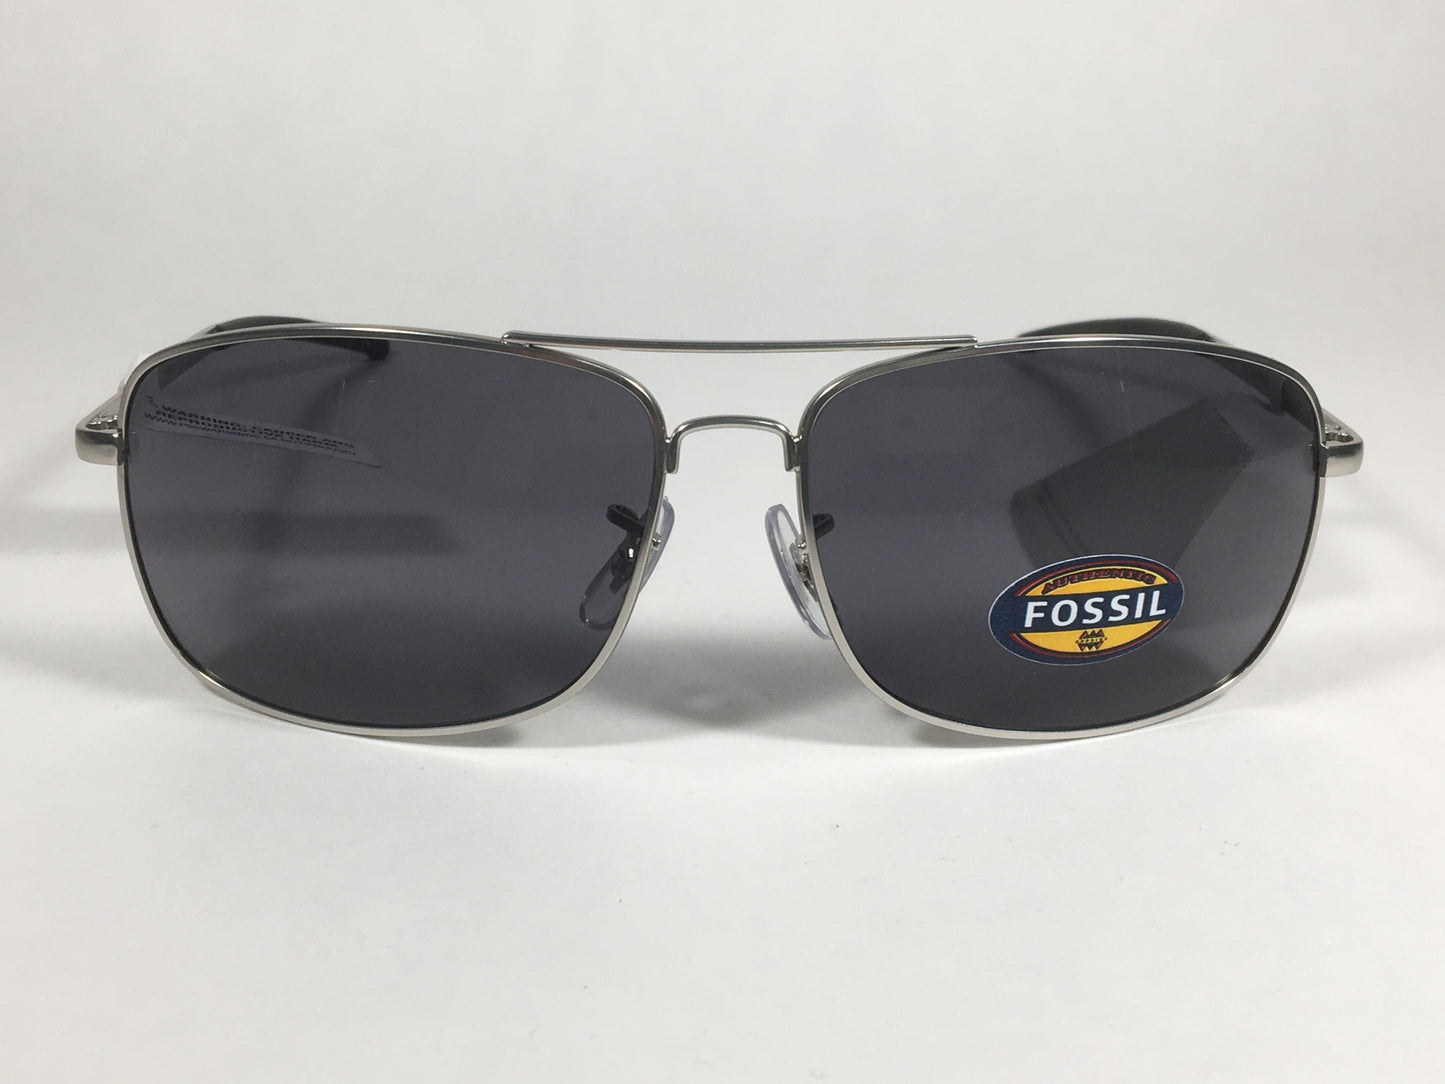 Fossil FM32 Navigator Rectangular Sunglasses Silver Frame Gray Lens - Sunglasses